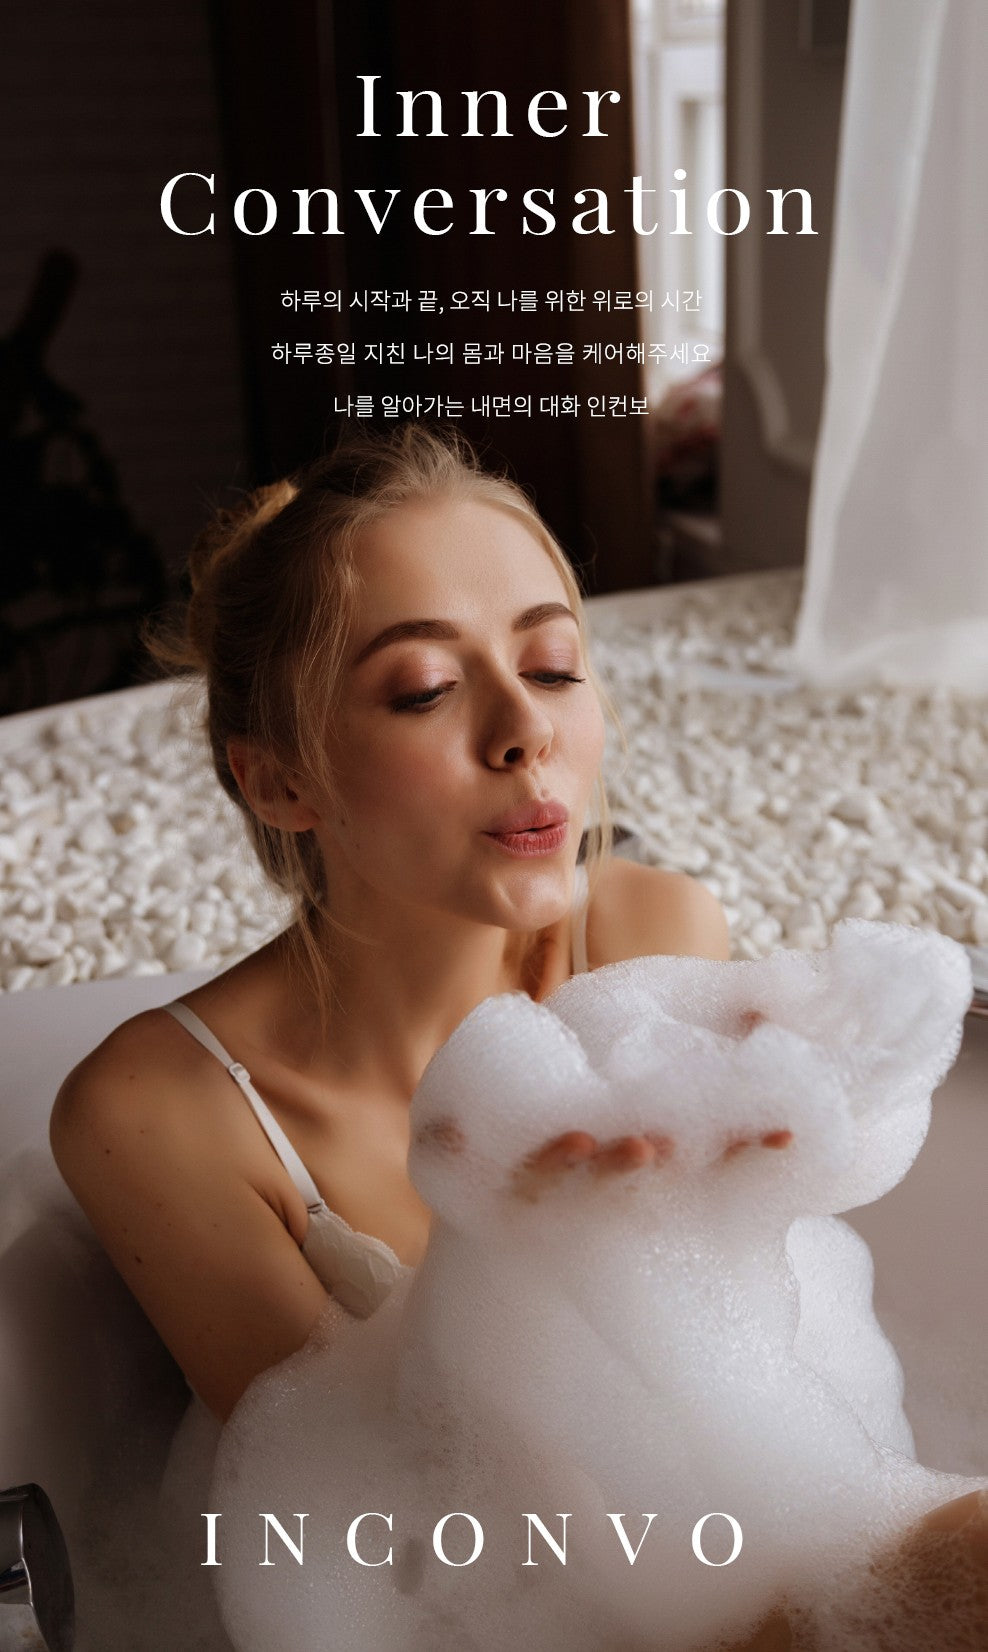 INCONVO Body & Face Perfumed Soaps Bathroom Skincare Moisturized